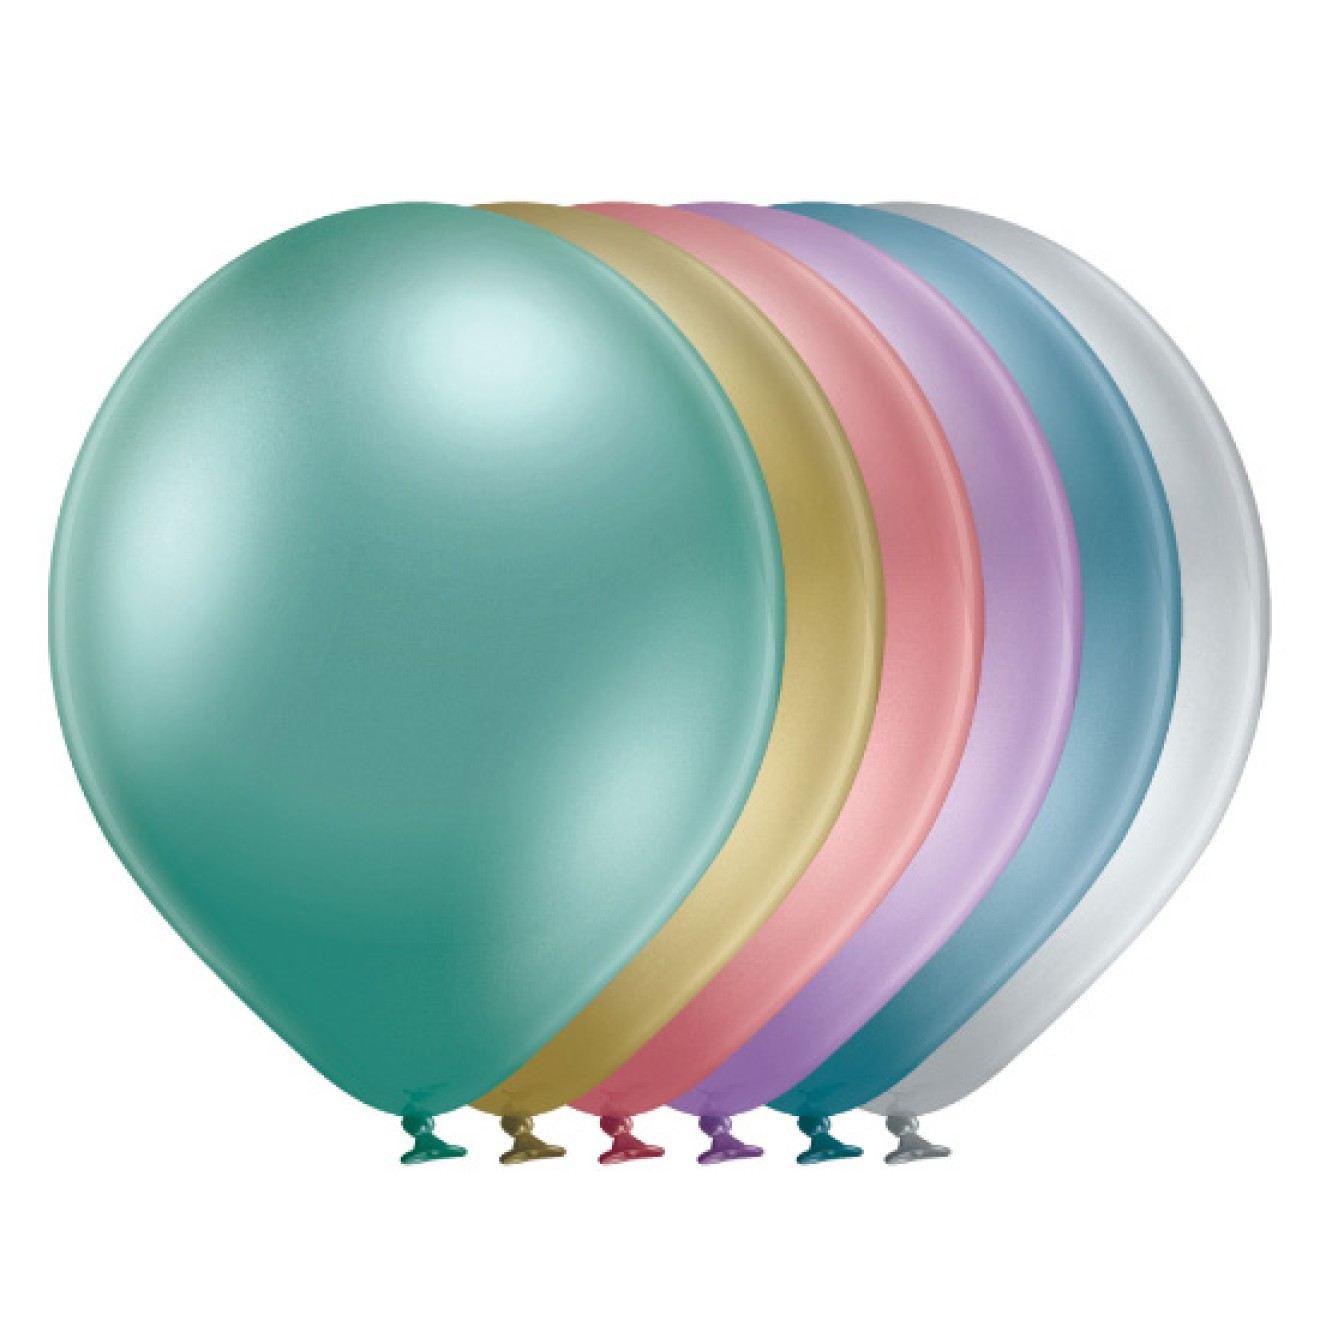 Luftballons Bunt gemischt - Glossy (Chrome)